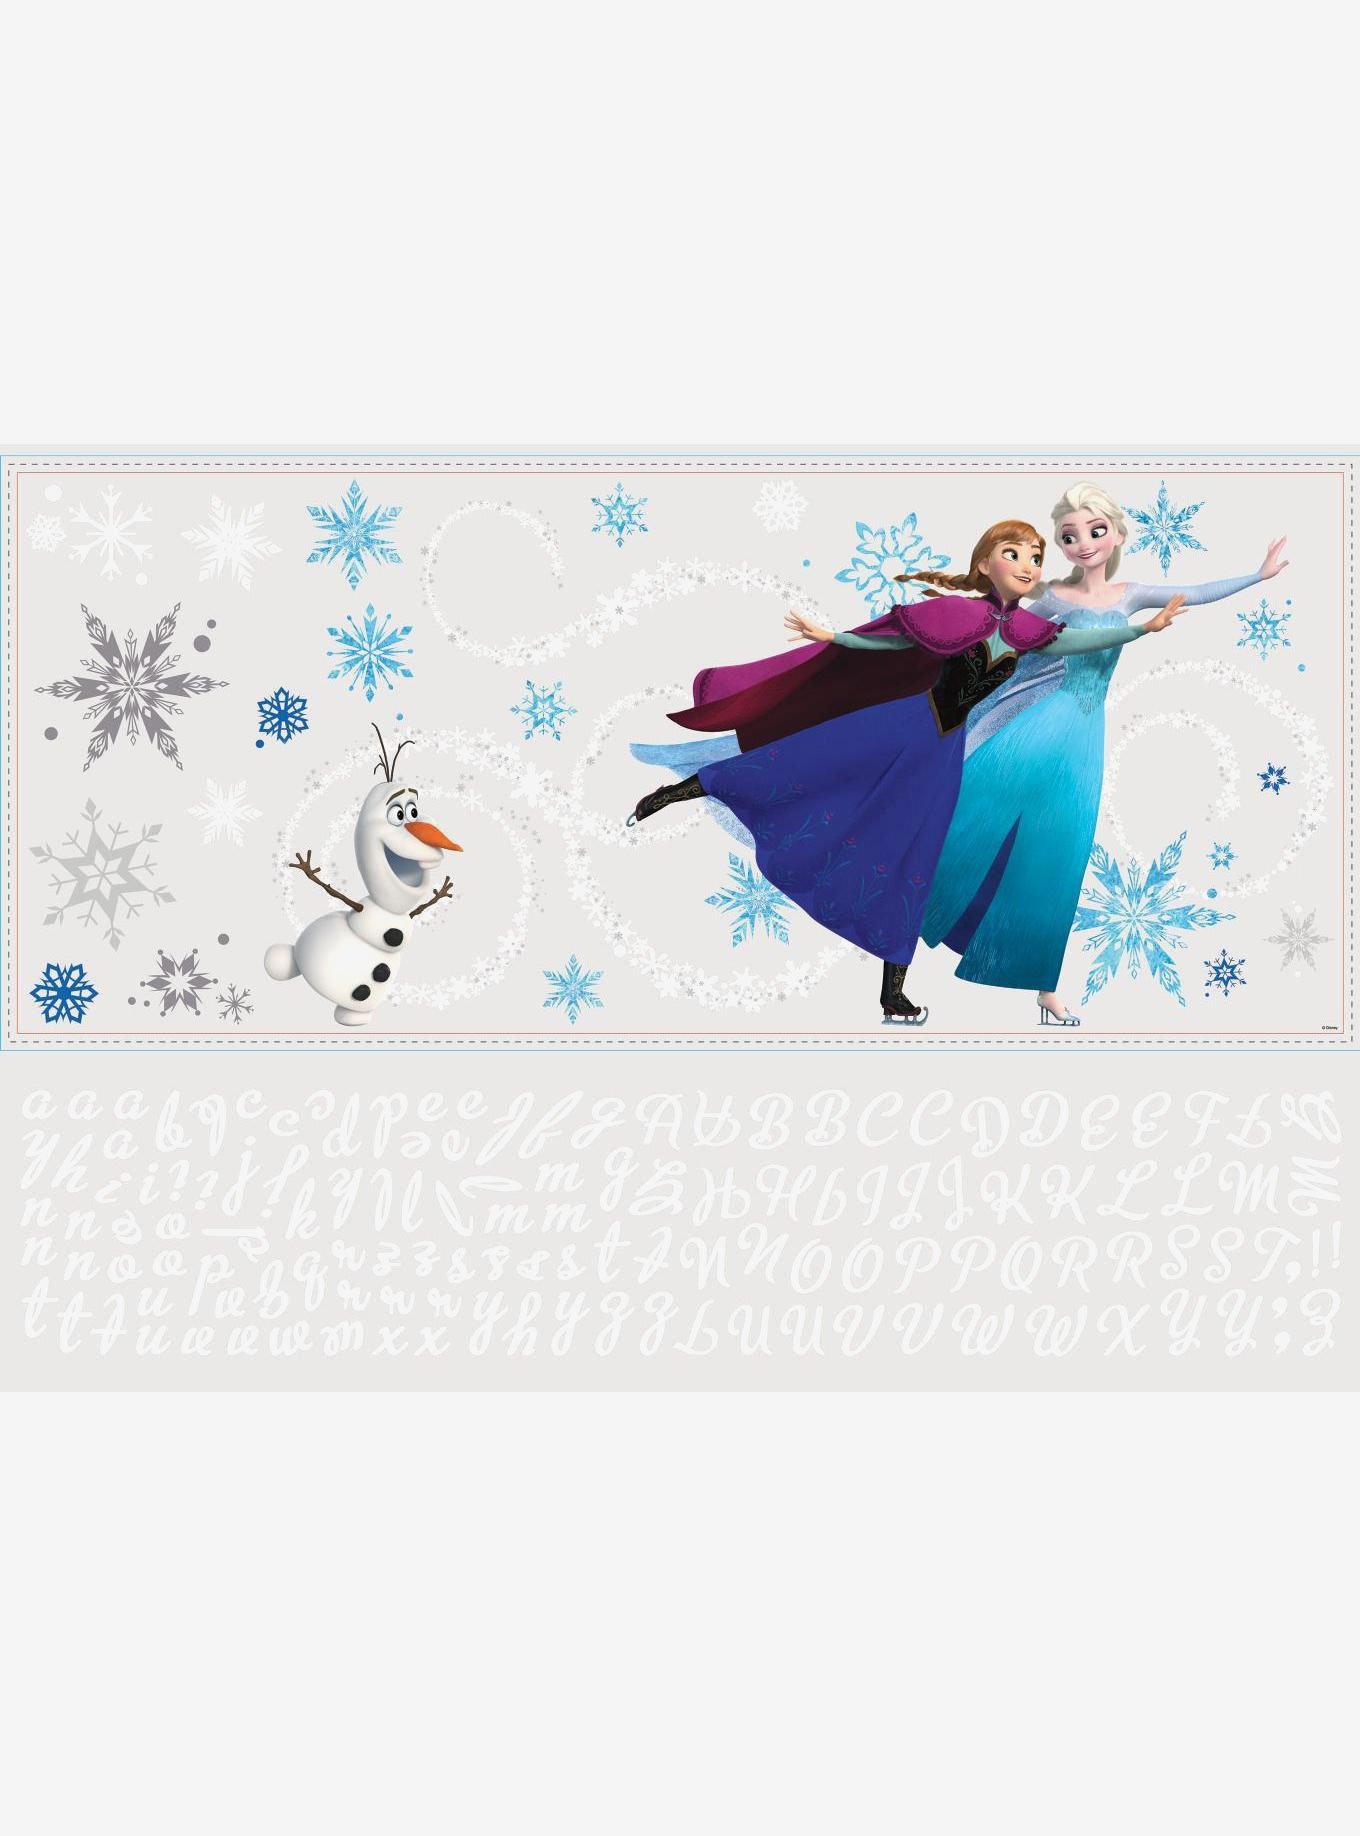 Disney's Frozen Light Up Musical Lunch Box Anna/Elsa/Olaf